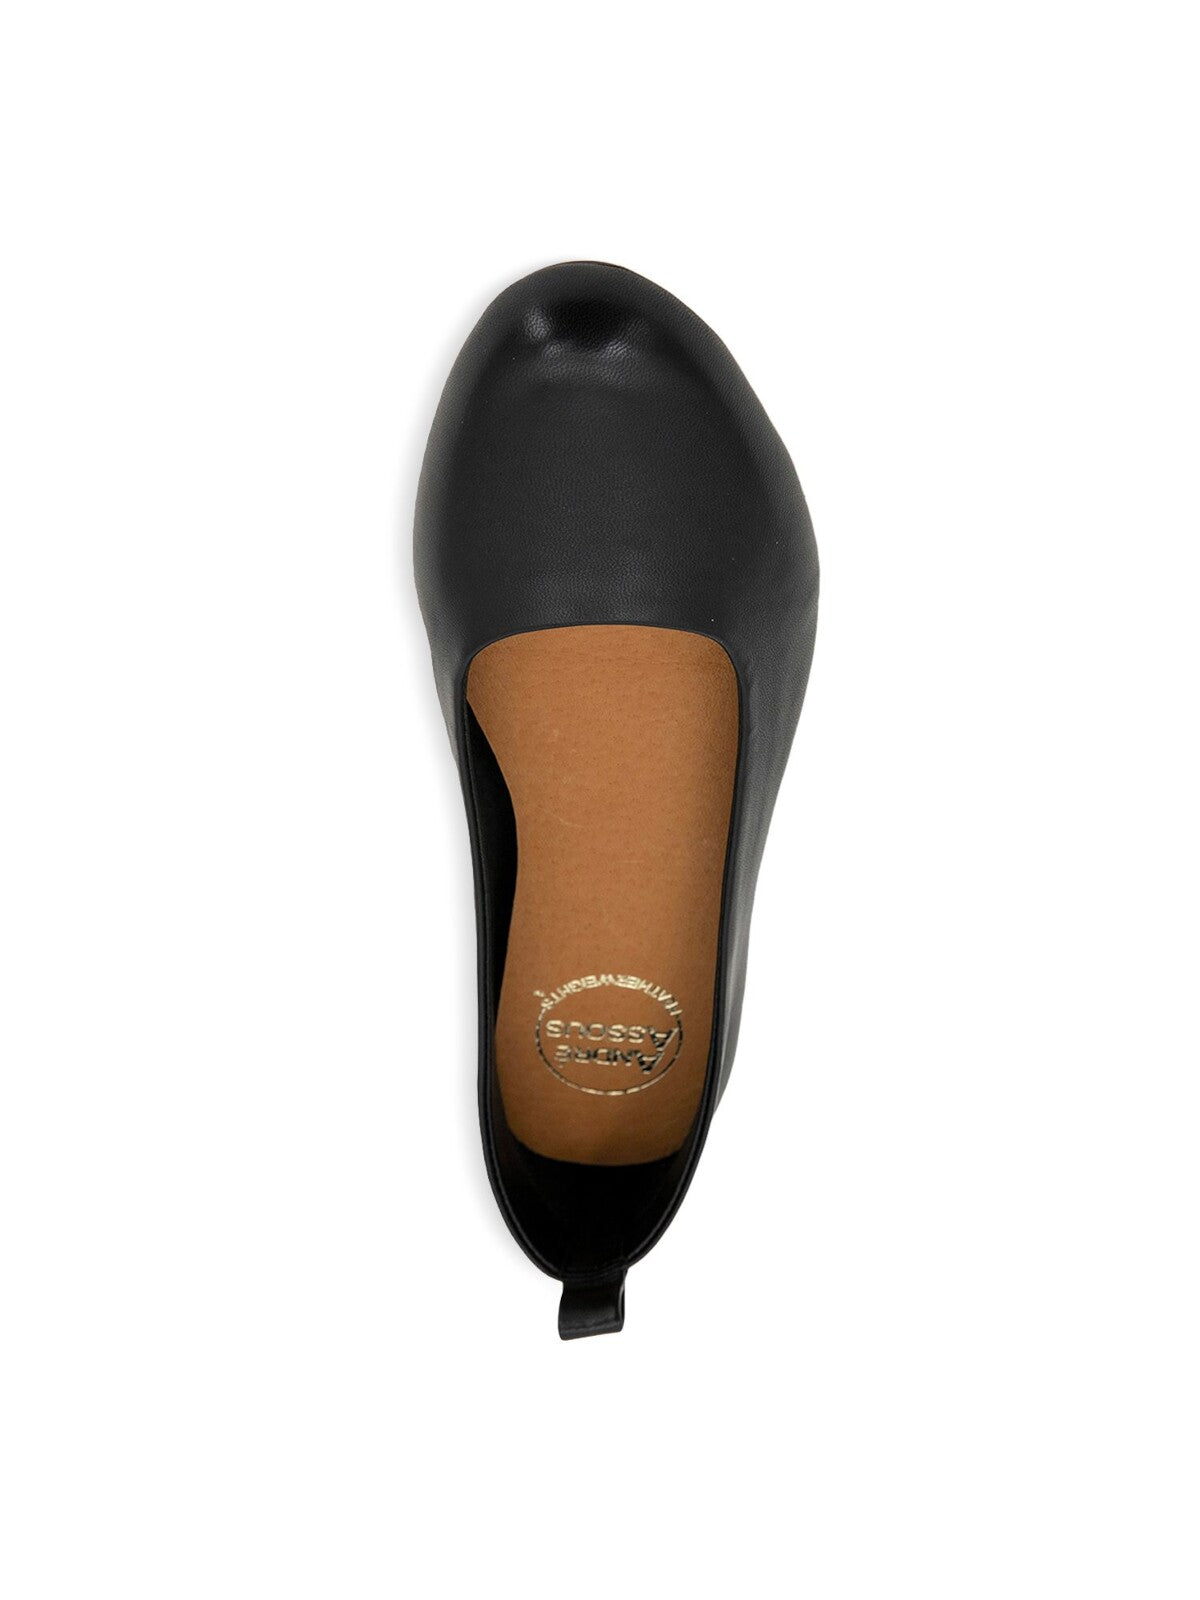 ANDRE ASSOUS Womens Black Comfort Nalah Round Toe Slip On Leather Flats Shoes 8 M